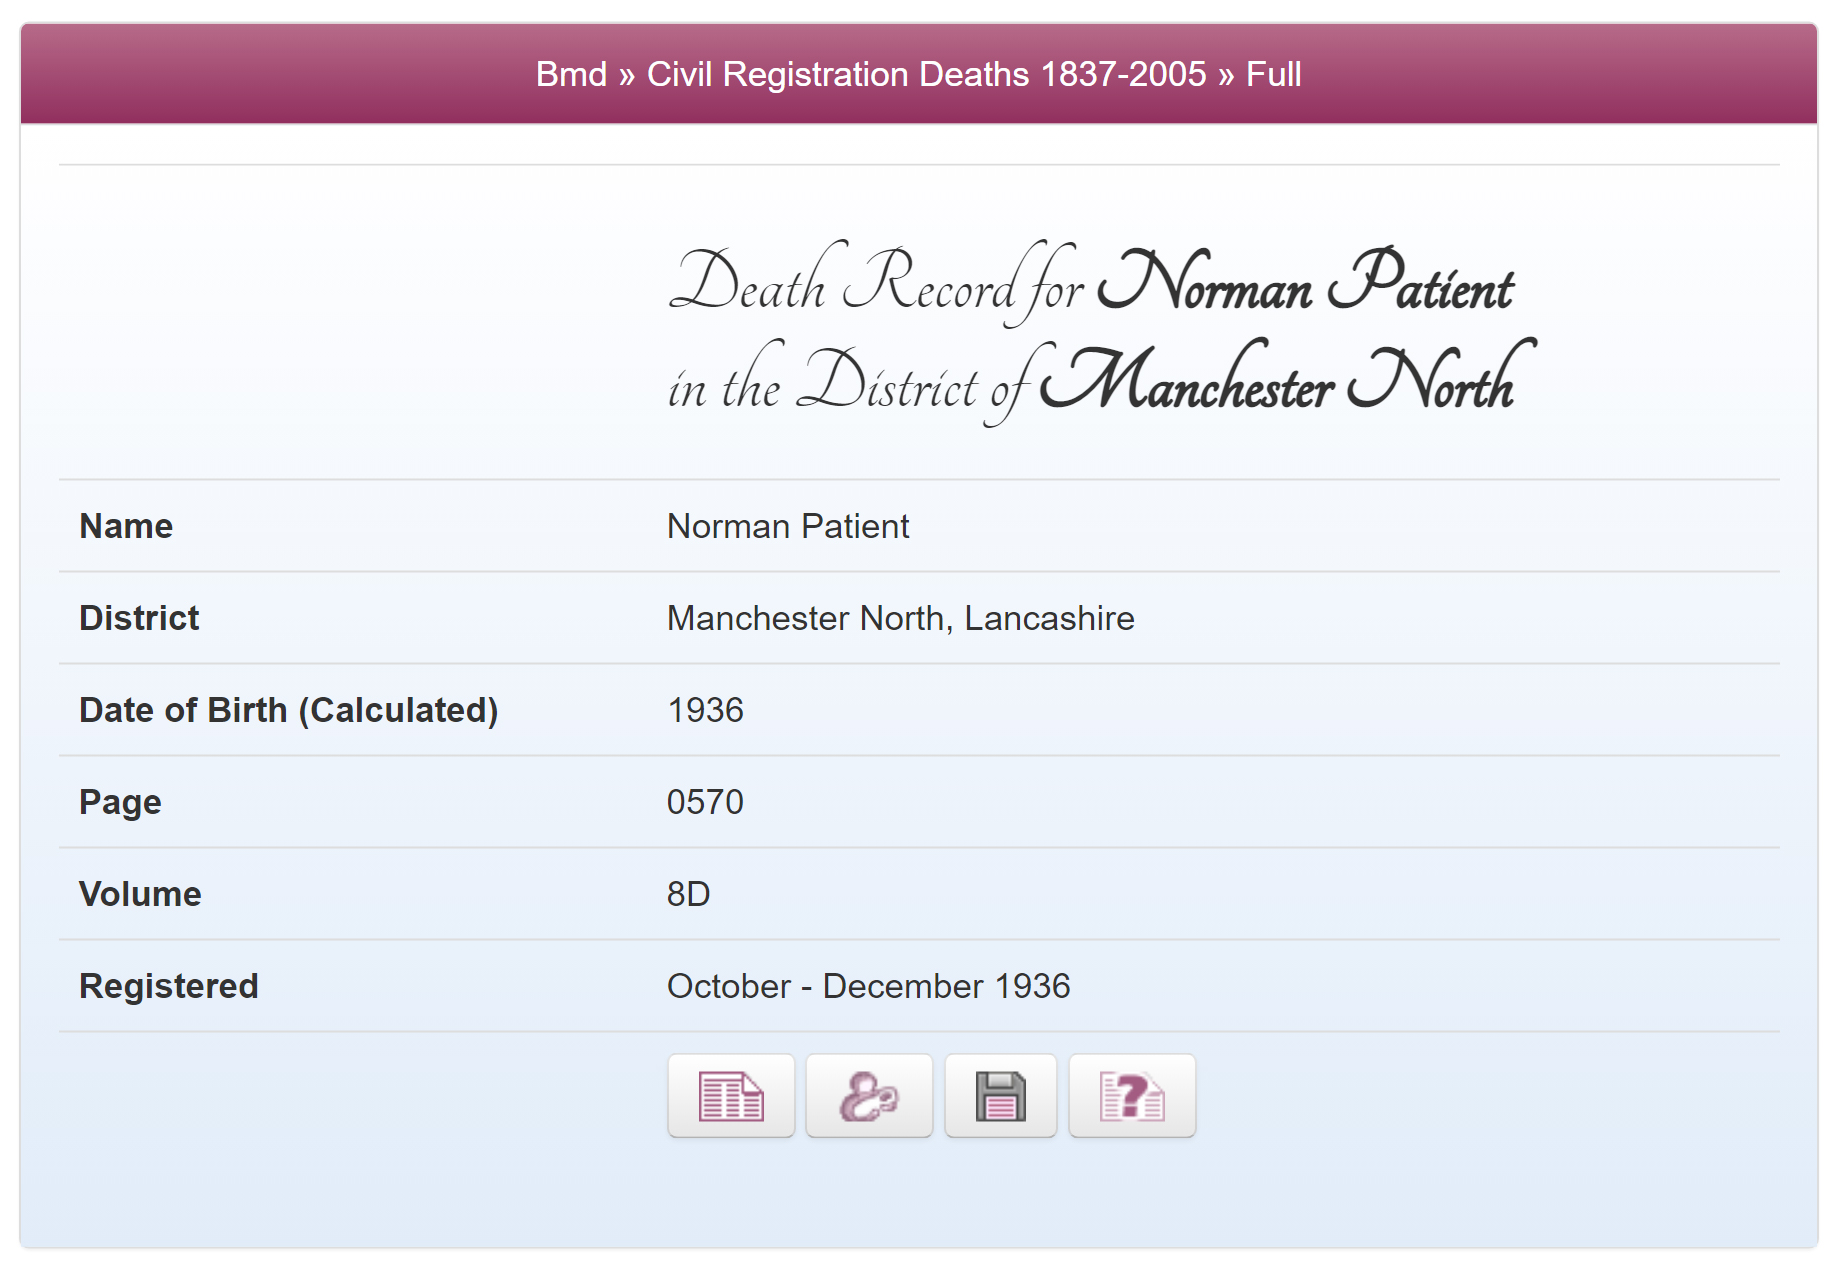 Norman Patient's death record